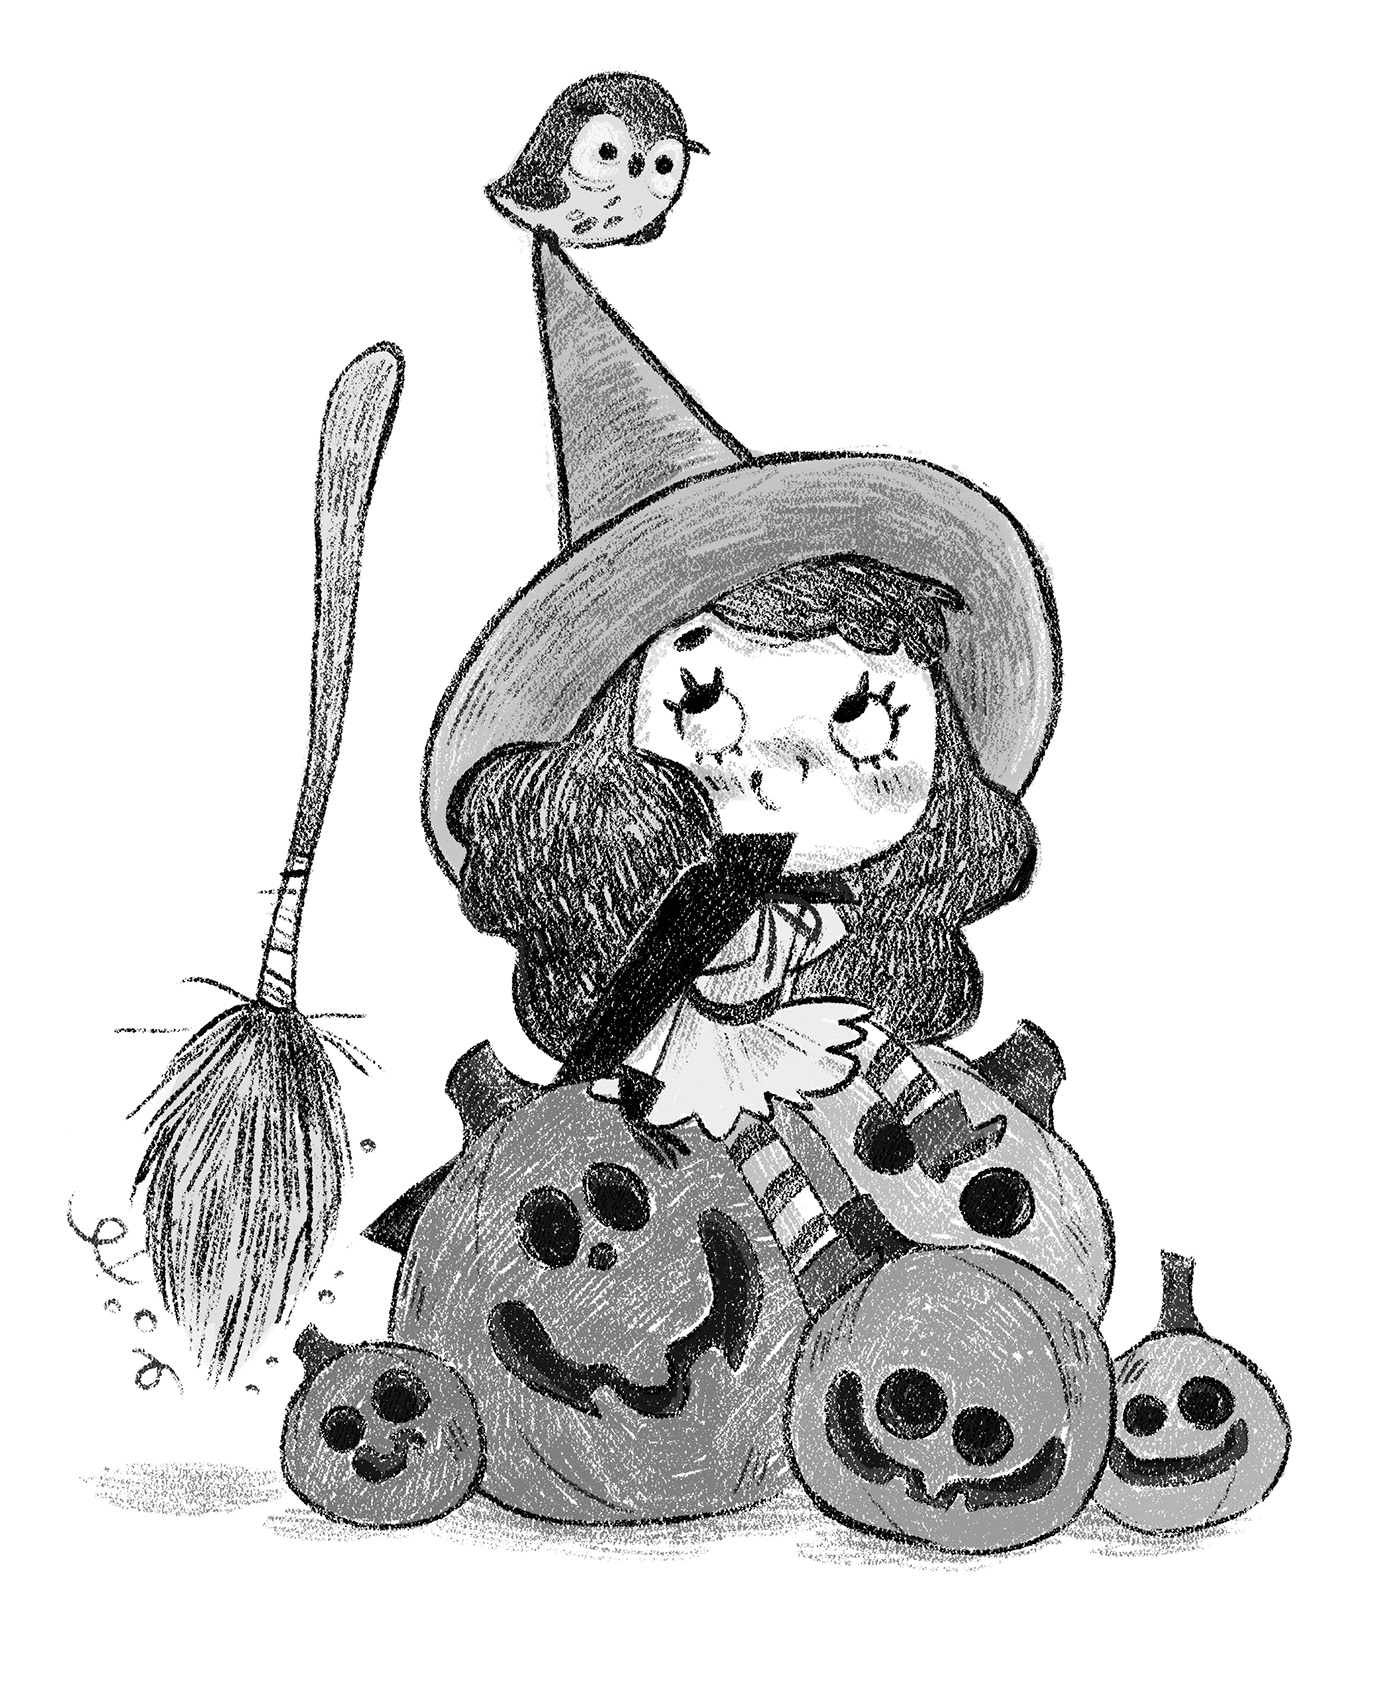 digitalart DigitalIllustration Halloween kidillustration kidlit pumpkins Witches wizard